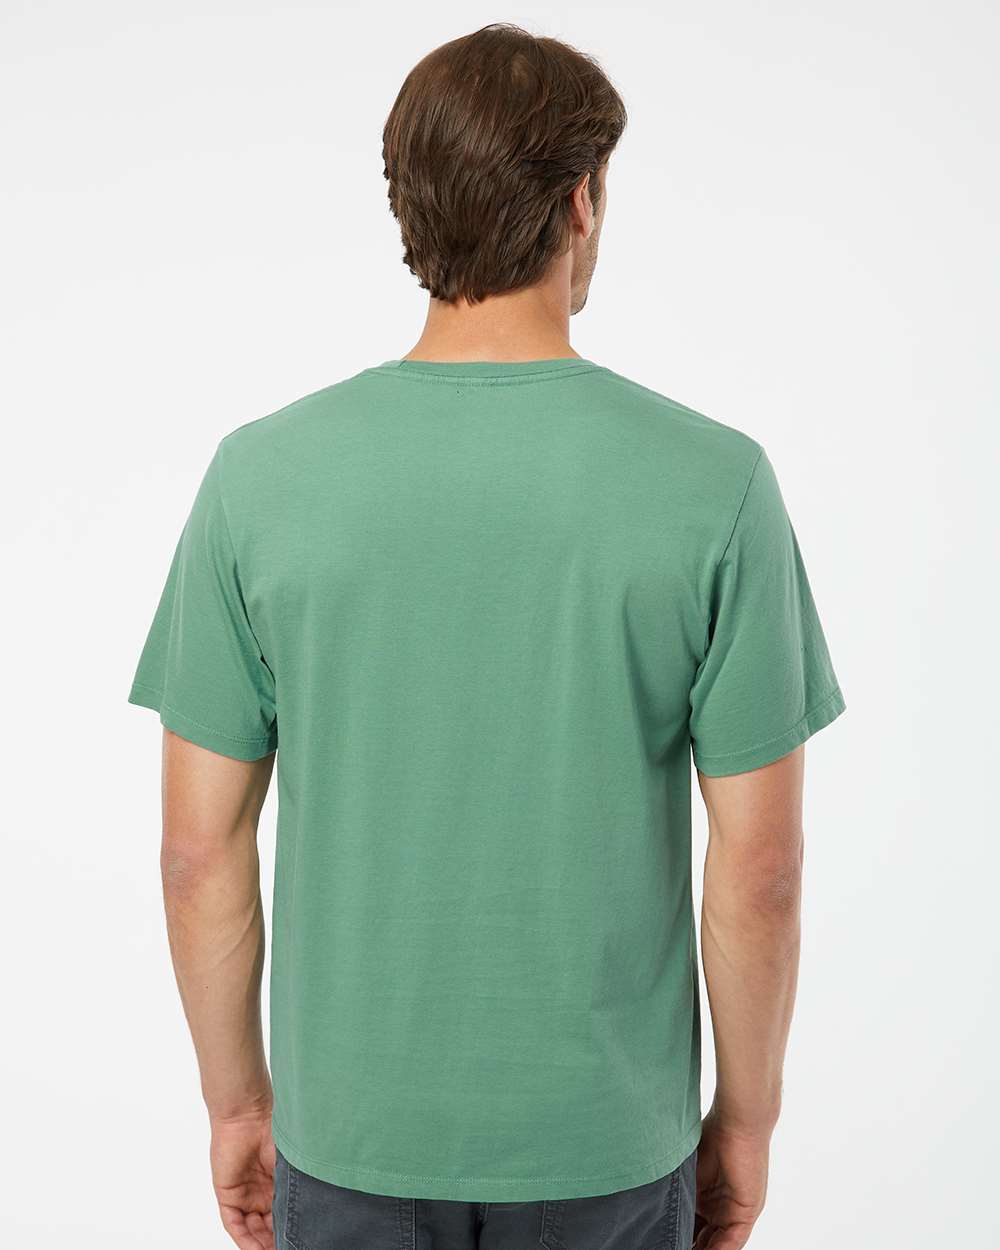 Softshirts® Unisex Organic Cotton T-shirt